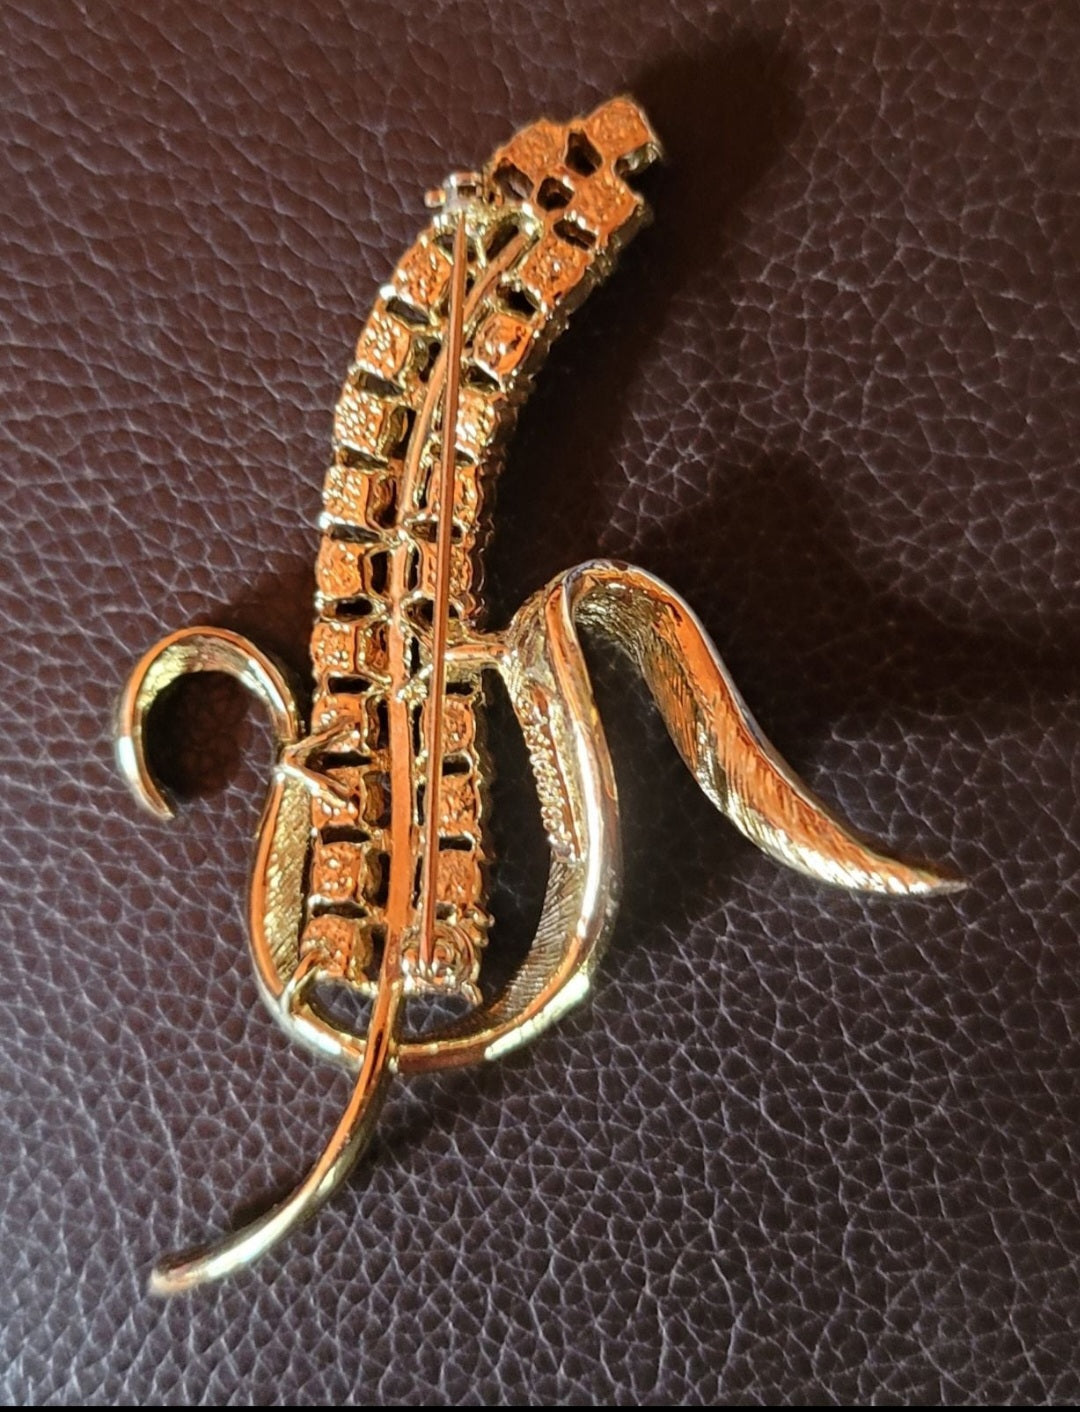 Vintage corn pin with rhinestones